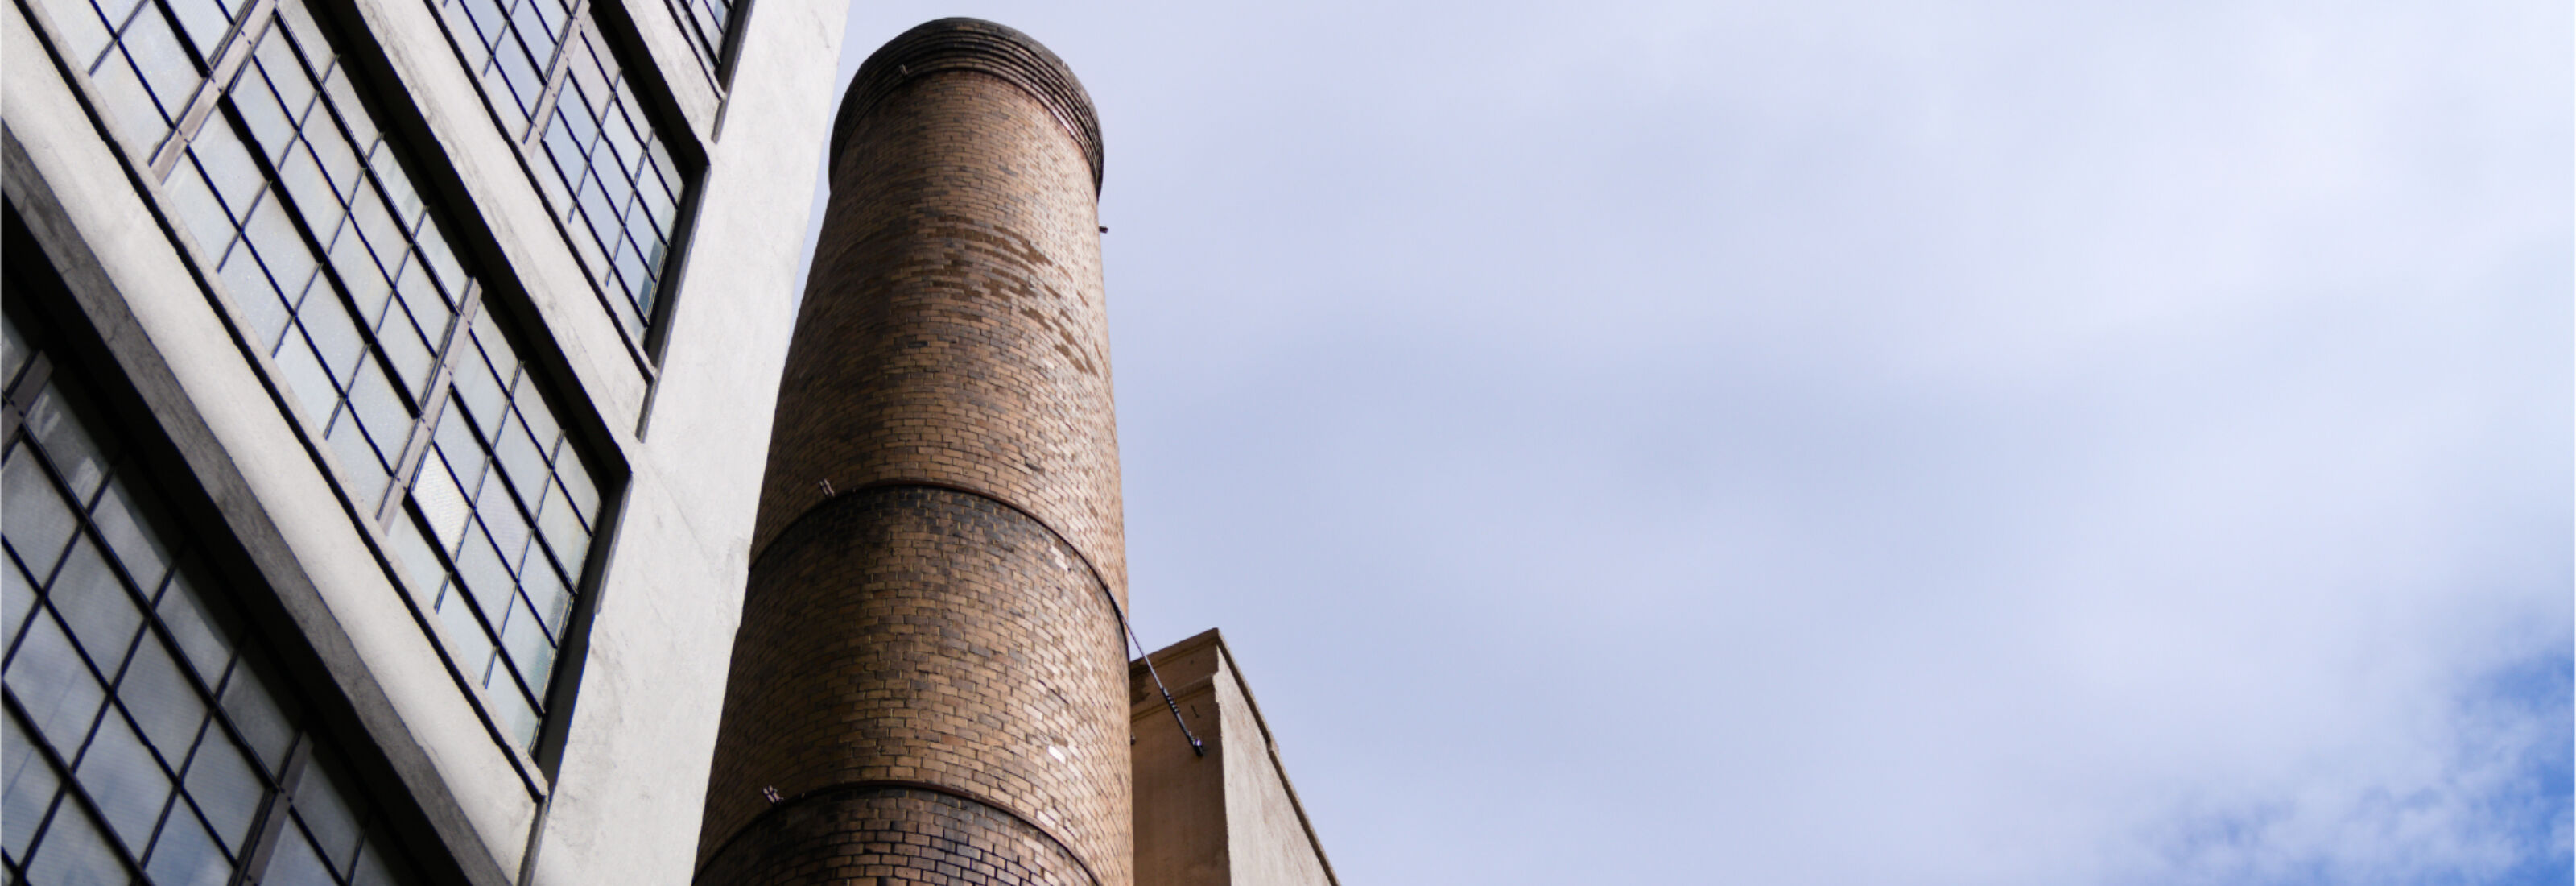 Brick chimneys